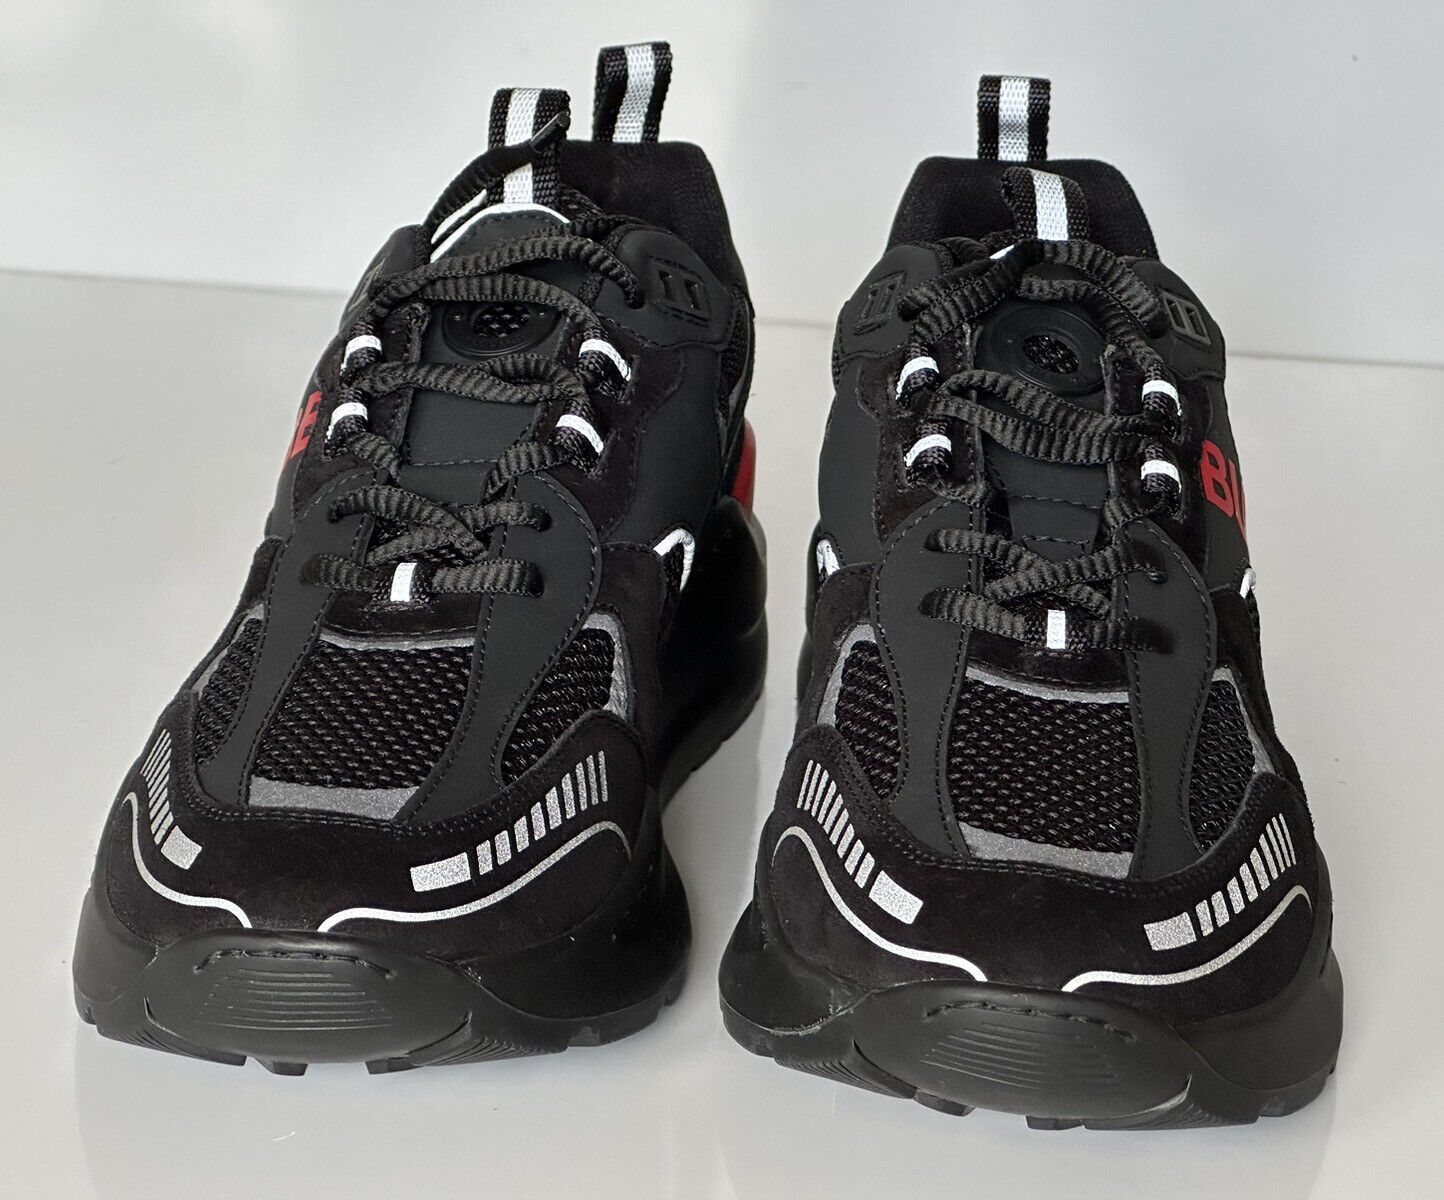 NIB $850 Burberry TNR Sean Men's Black/Red Sneakers 9 US (42 Eu) 8057350 IT